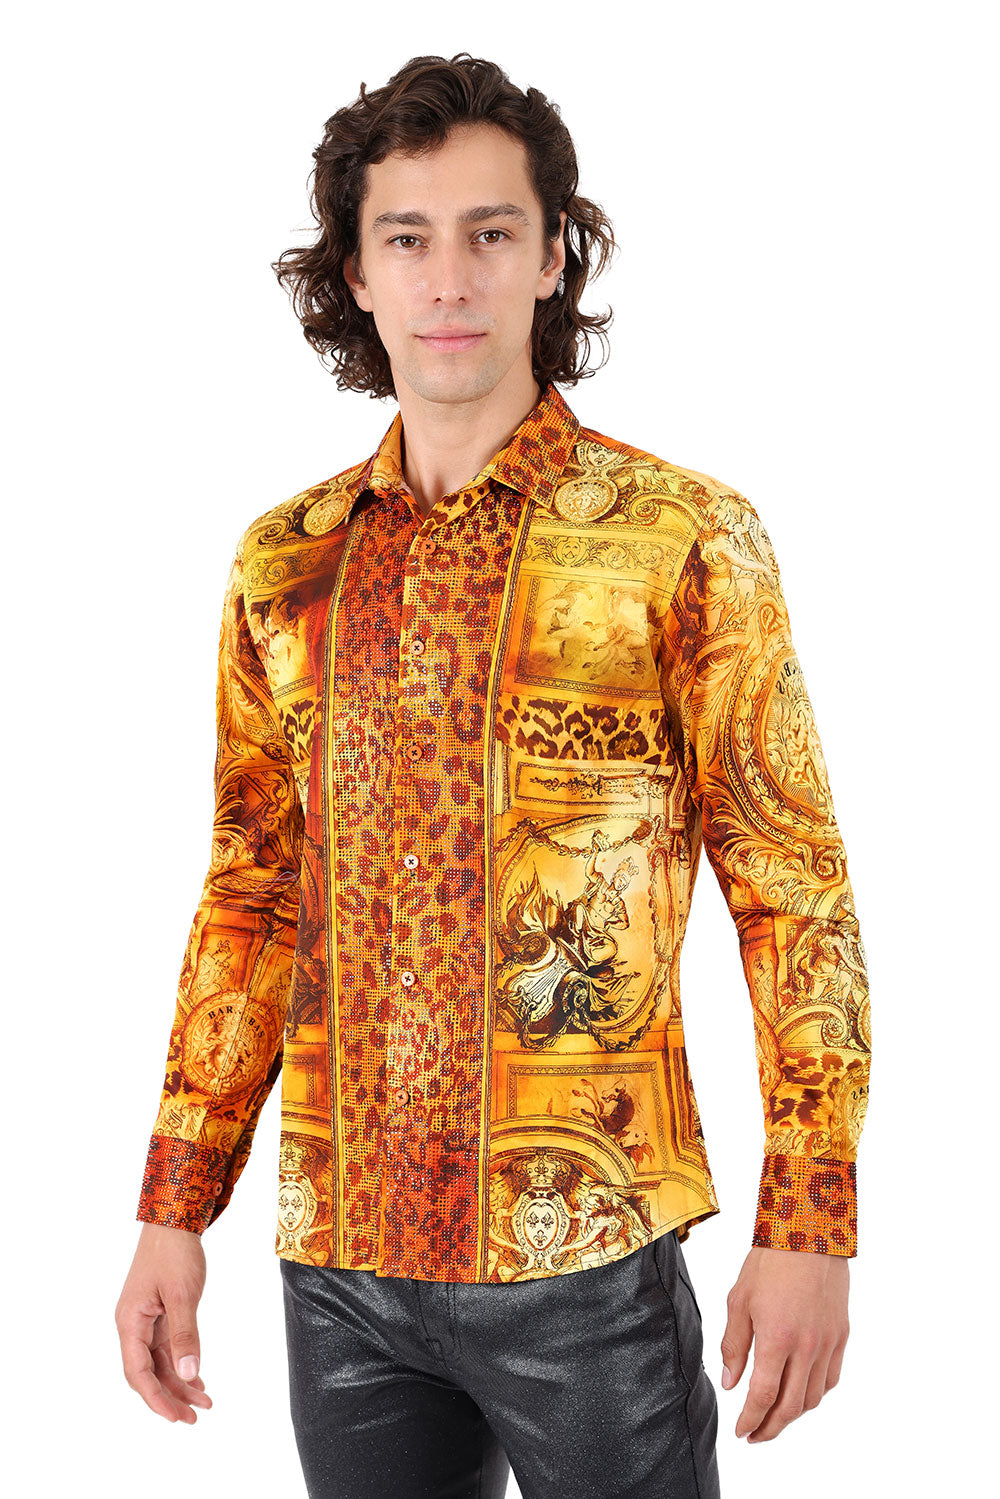 BARABAS Men's Rhinestone Medusa Floral Angeles Baroque Shirt 2SPR220 Multi